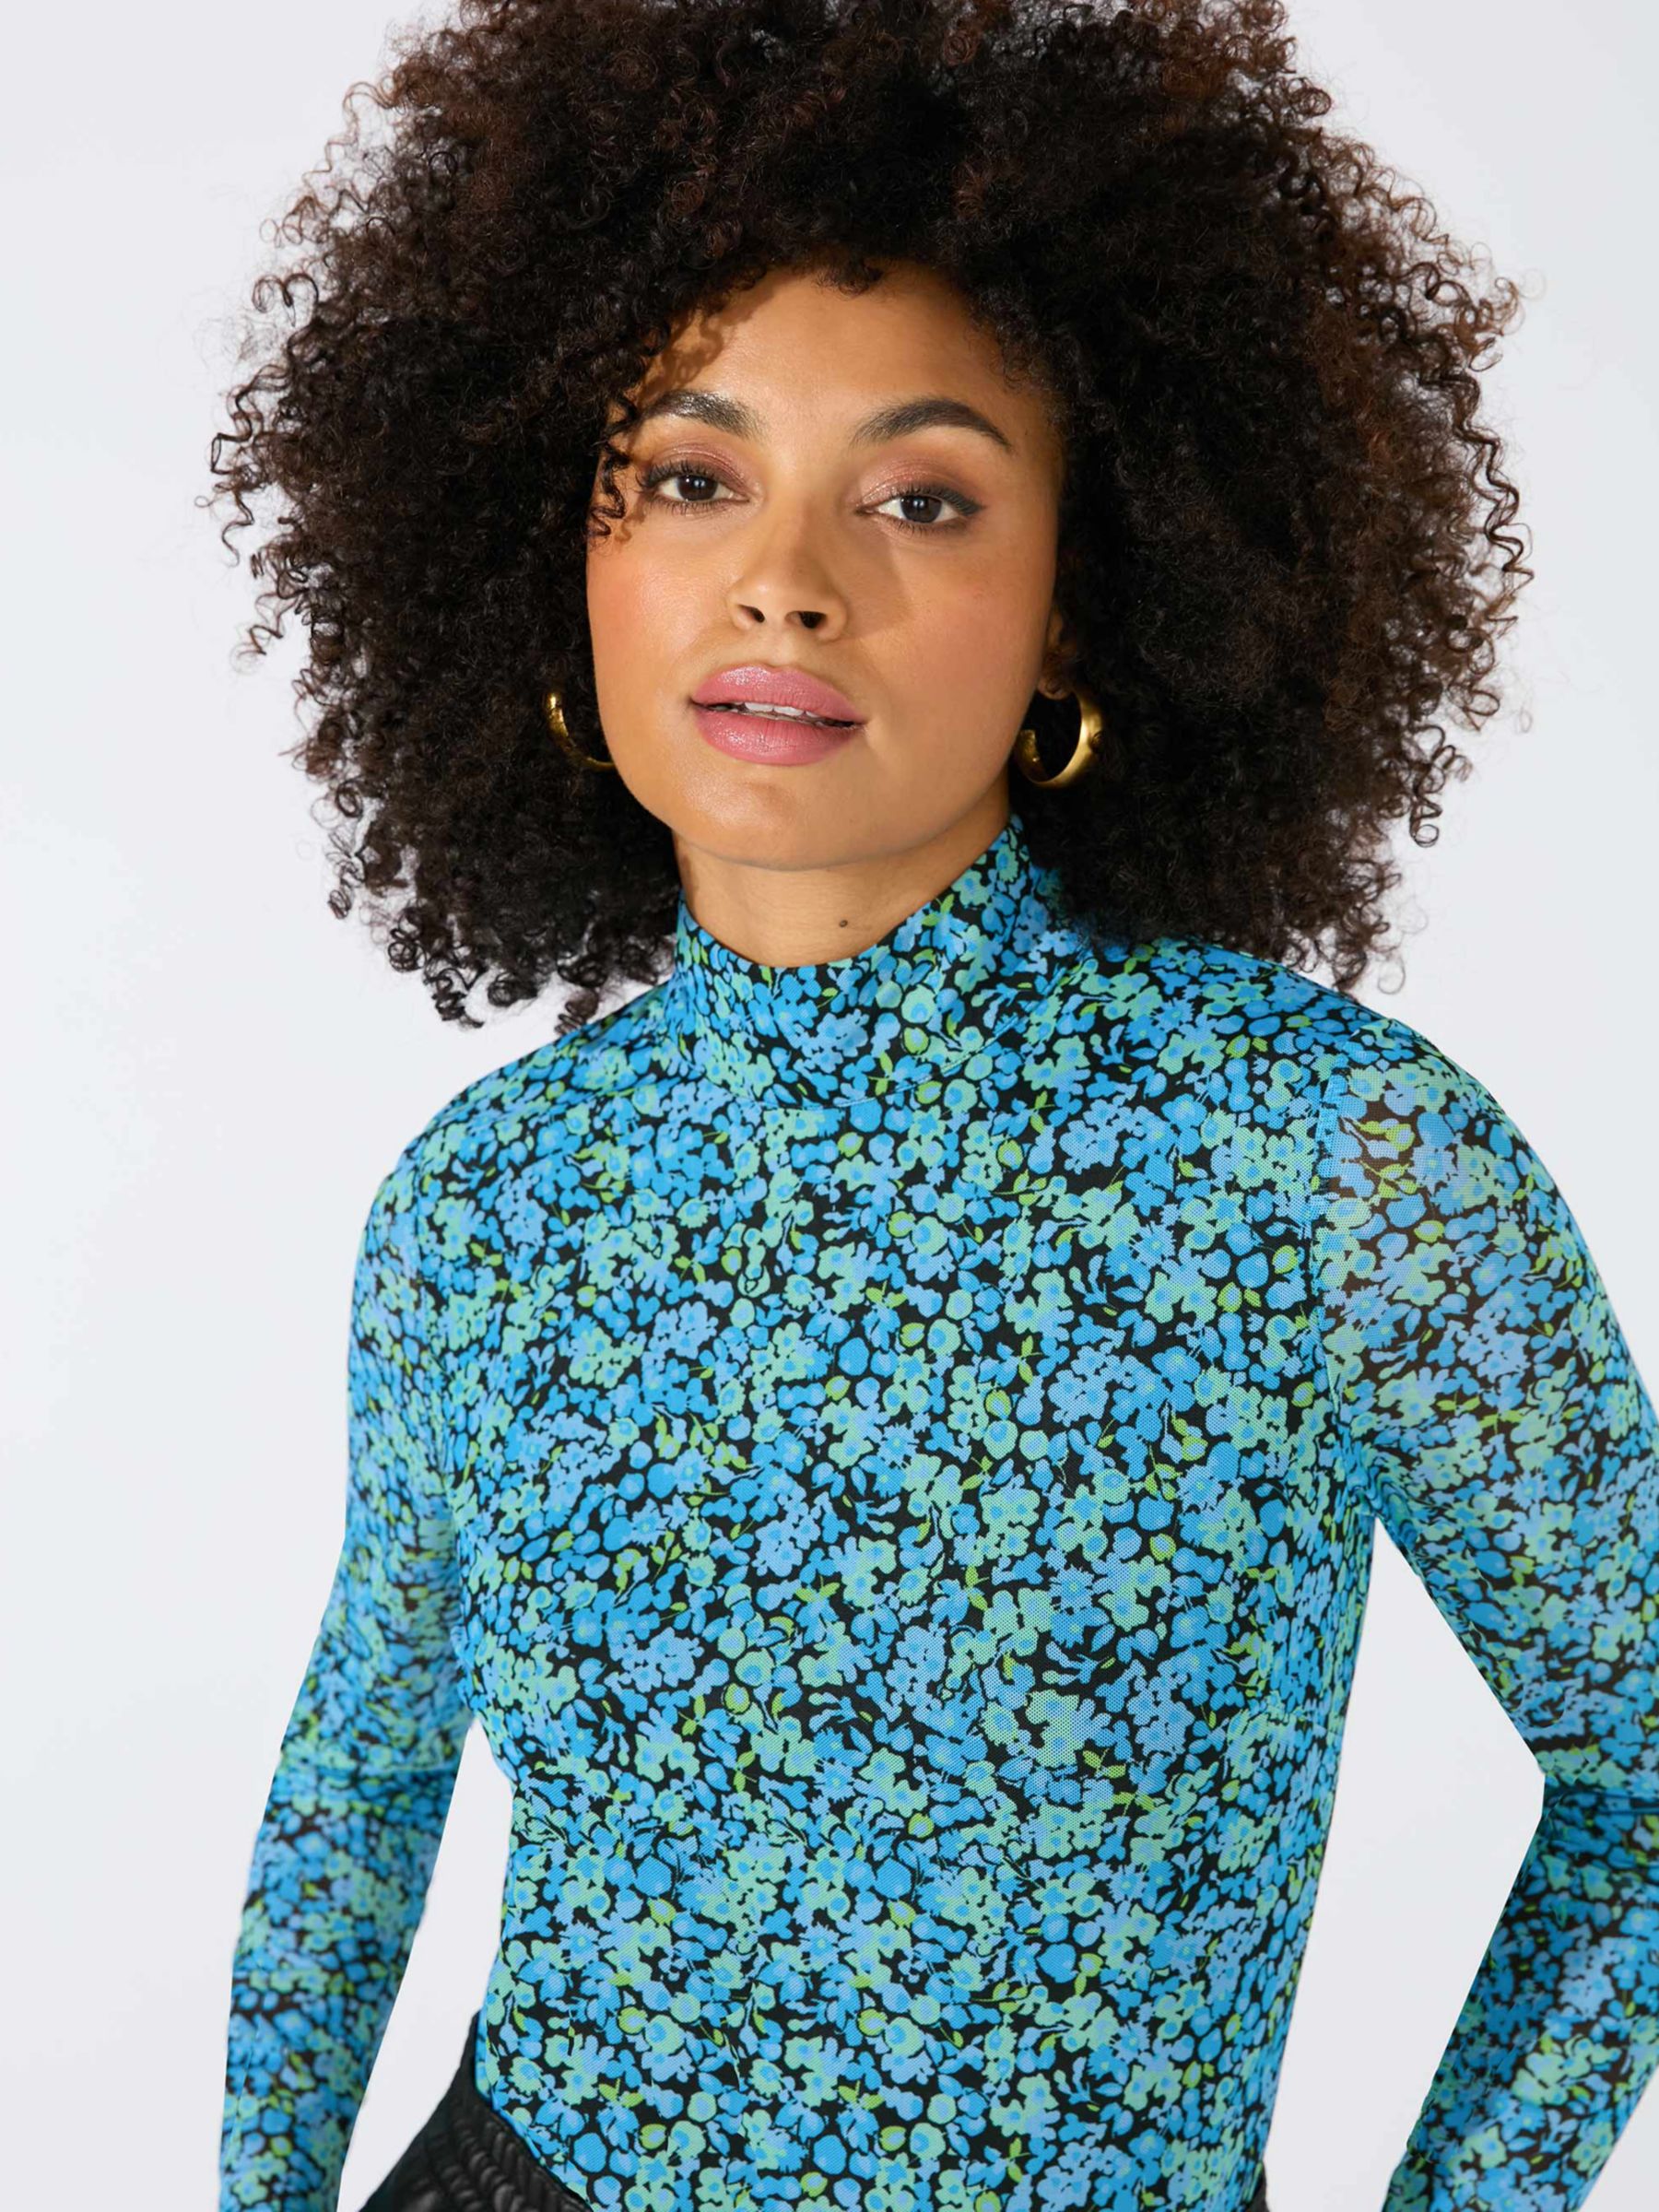 Ro&Zo Floral Mesh Shirt, Blue at John Lewis & Partners